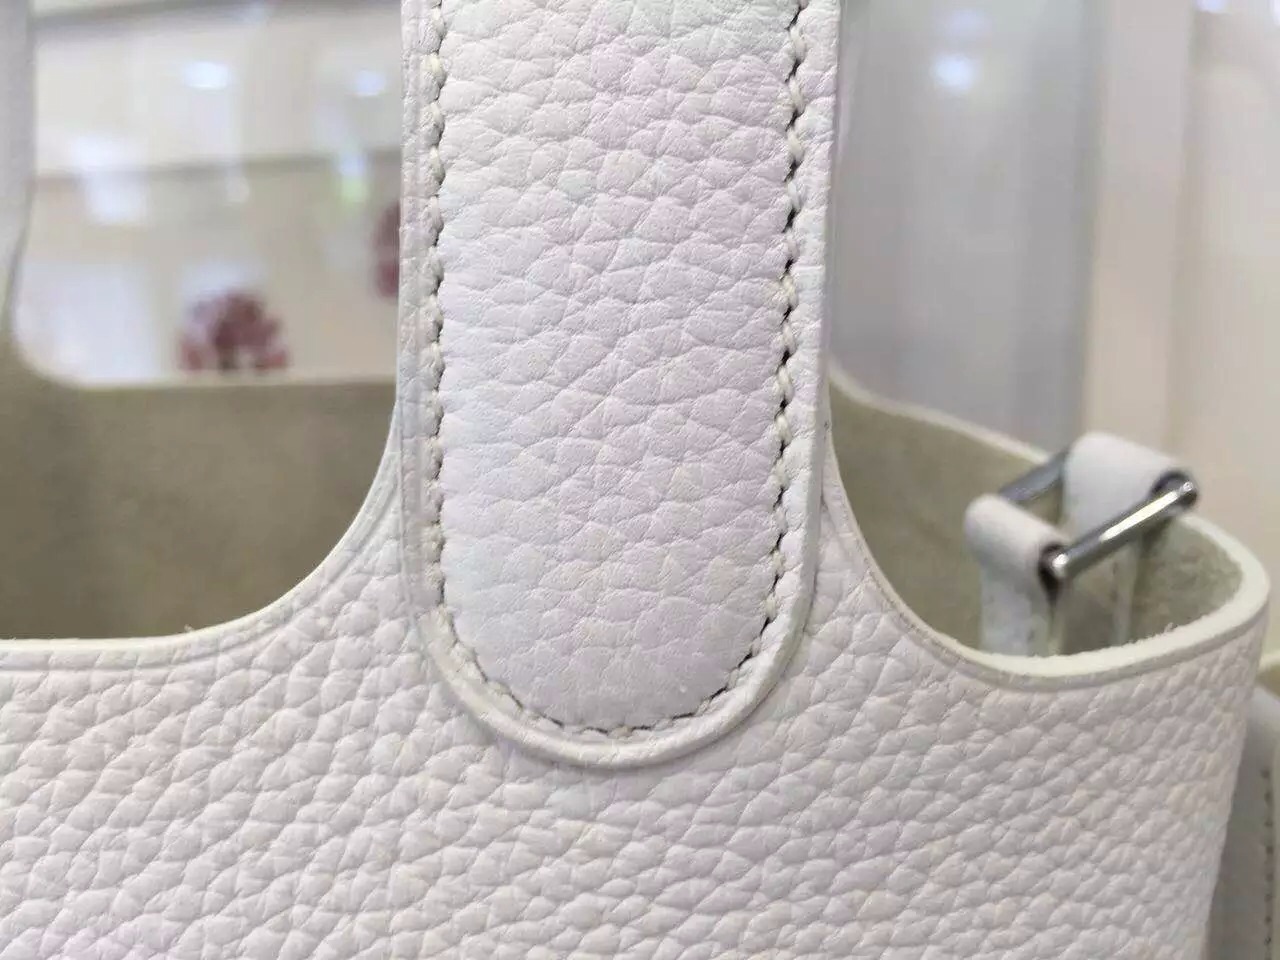 Luxury Hermes White Original Togo Leather Picotin Lock Women&#8217;s Tote Bag 18 &#038; 22CM